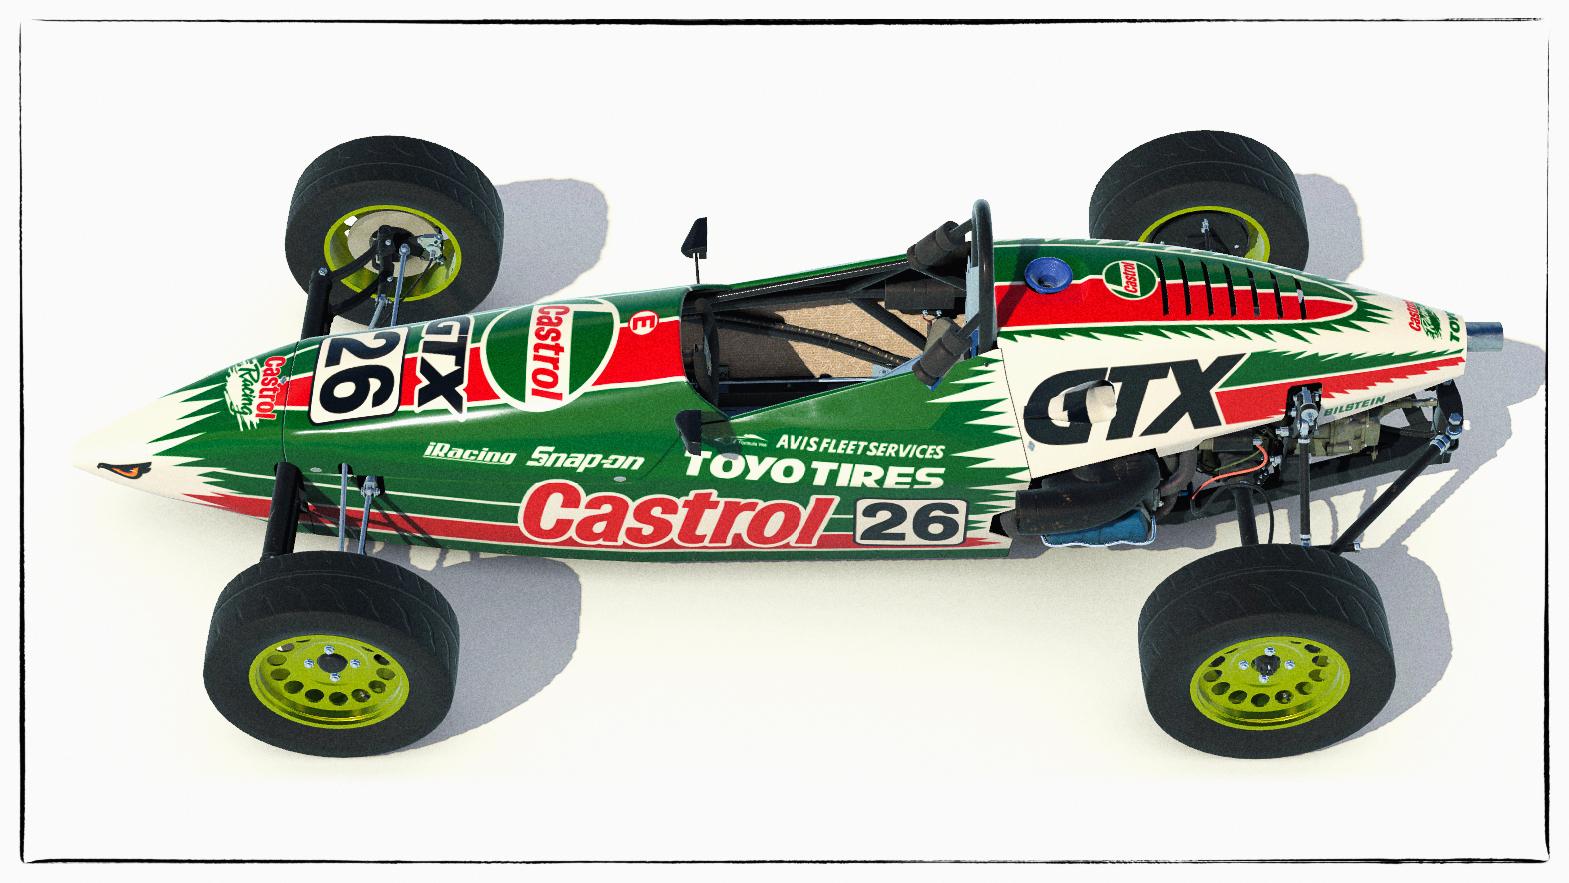 Preview of Castrol GTX Retro Formula Vee by Simon Bailey